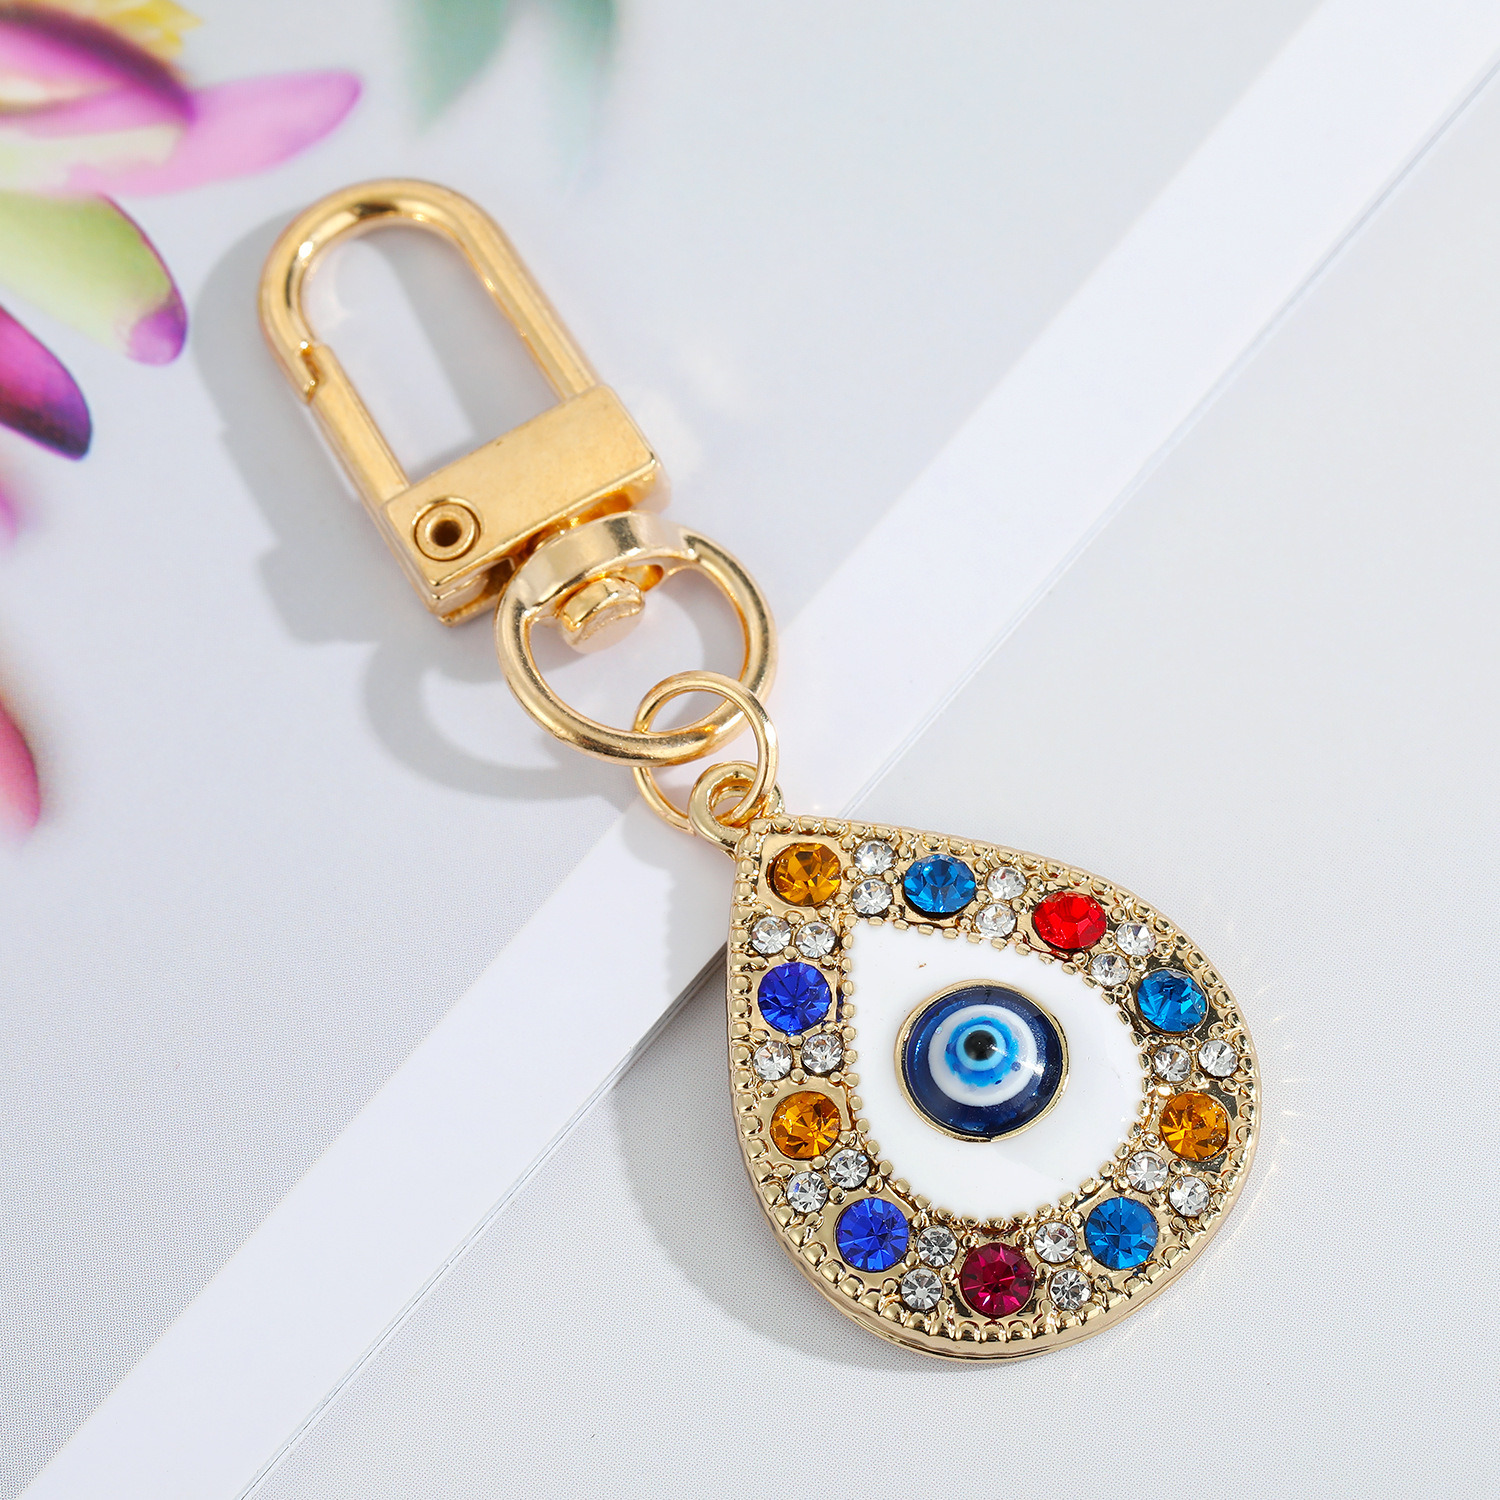 Creative Devils Eye Keychain Blue Eyes Key Ring Handbag Pendant Oil Dripping Eyes Door Latch CrossBorder Sold Jewelrypicture4